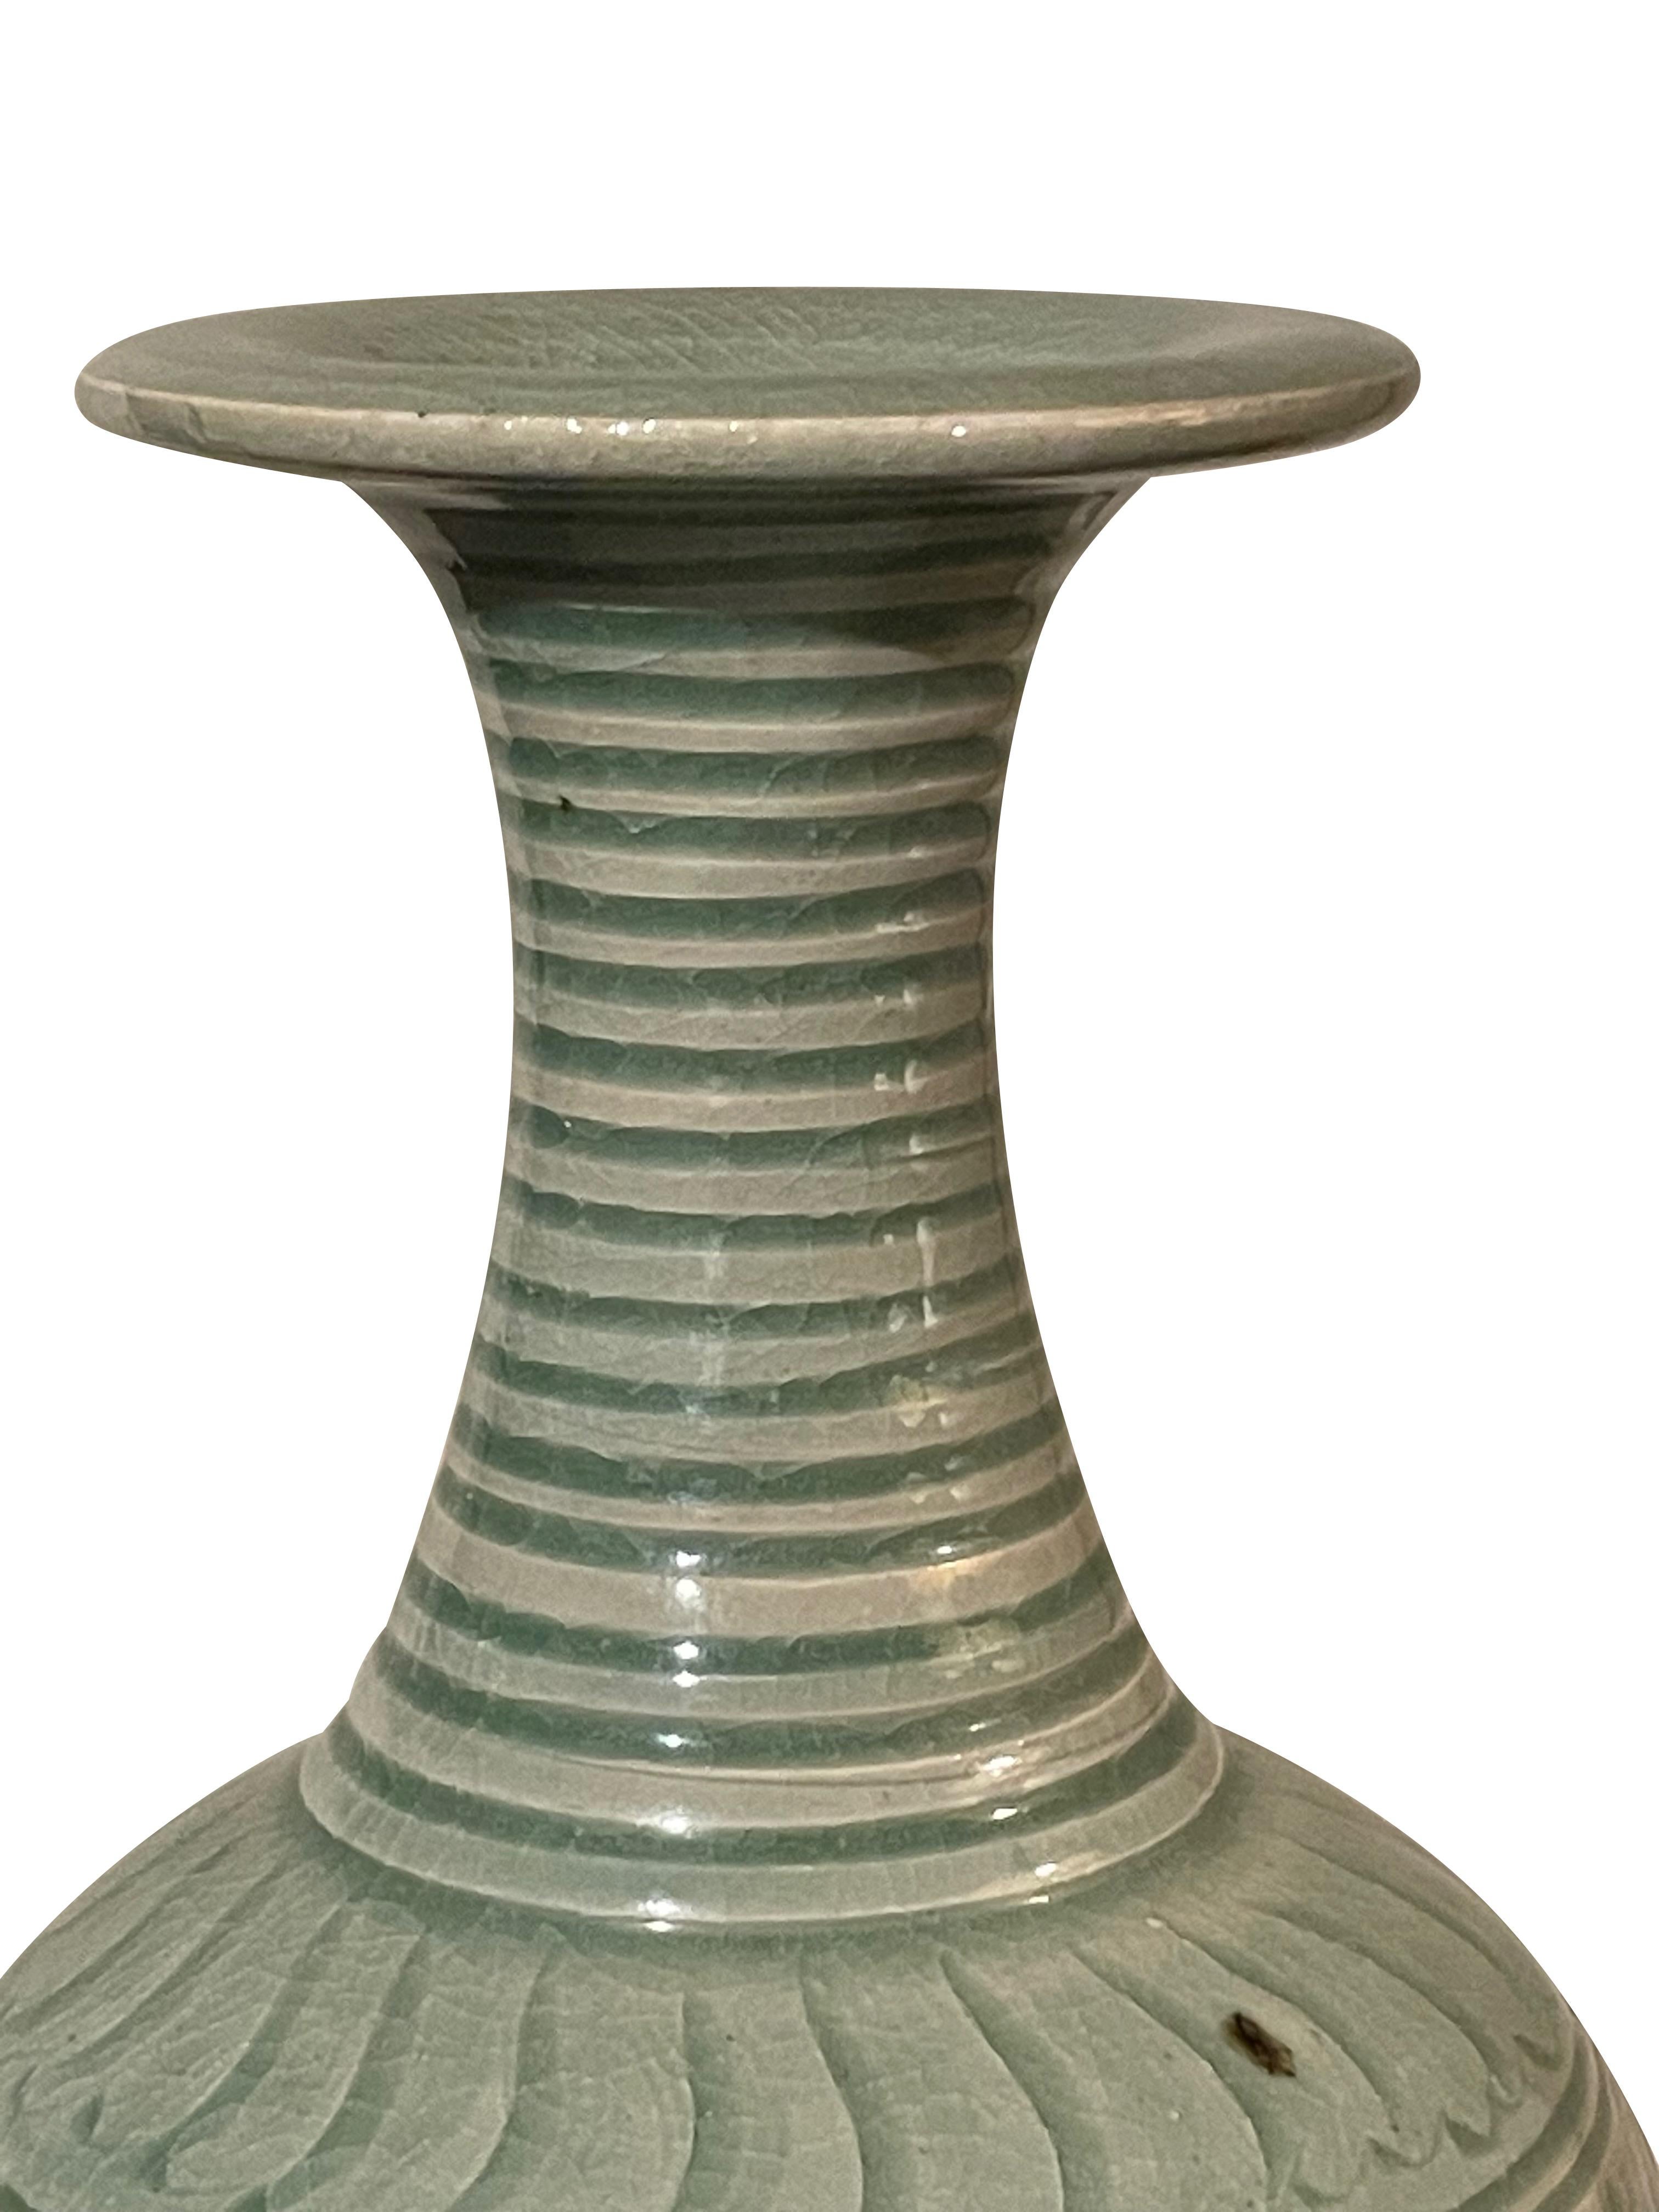 Contemporary Chinese celadon glazed vase with decorative pattern at base.
Horizontal raised rib detailing at neck.
